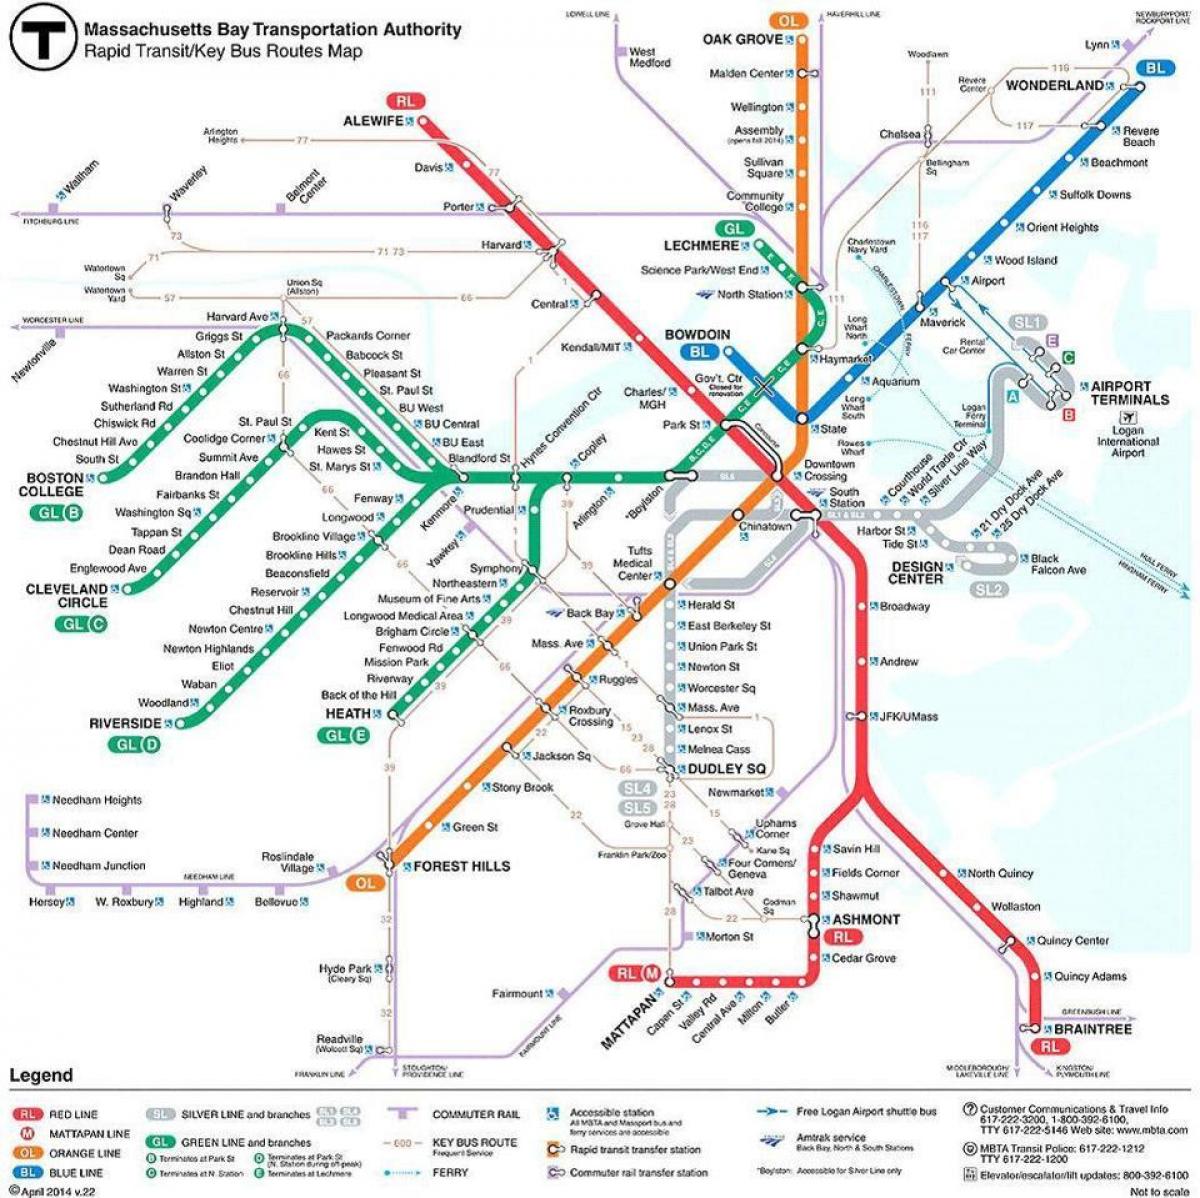 MBTA Boston kort